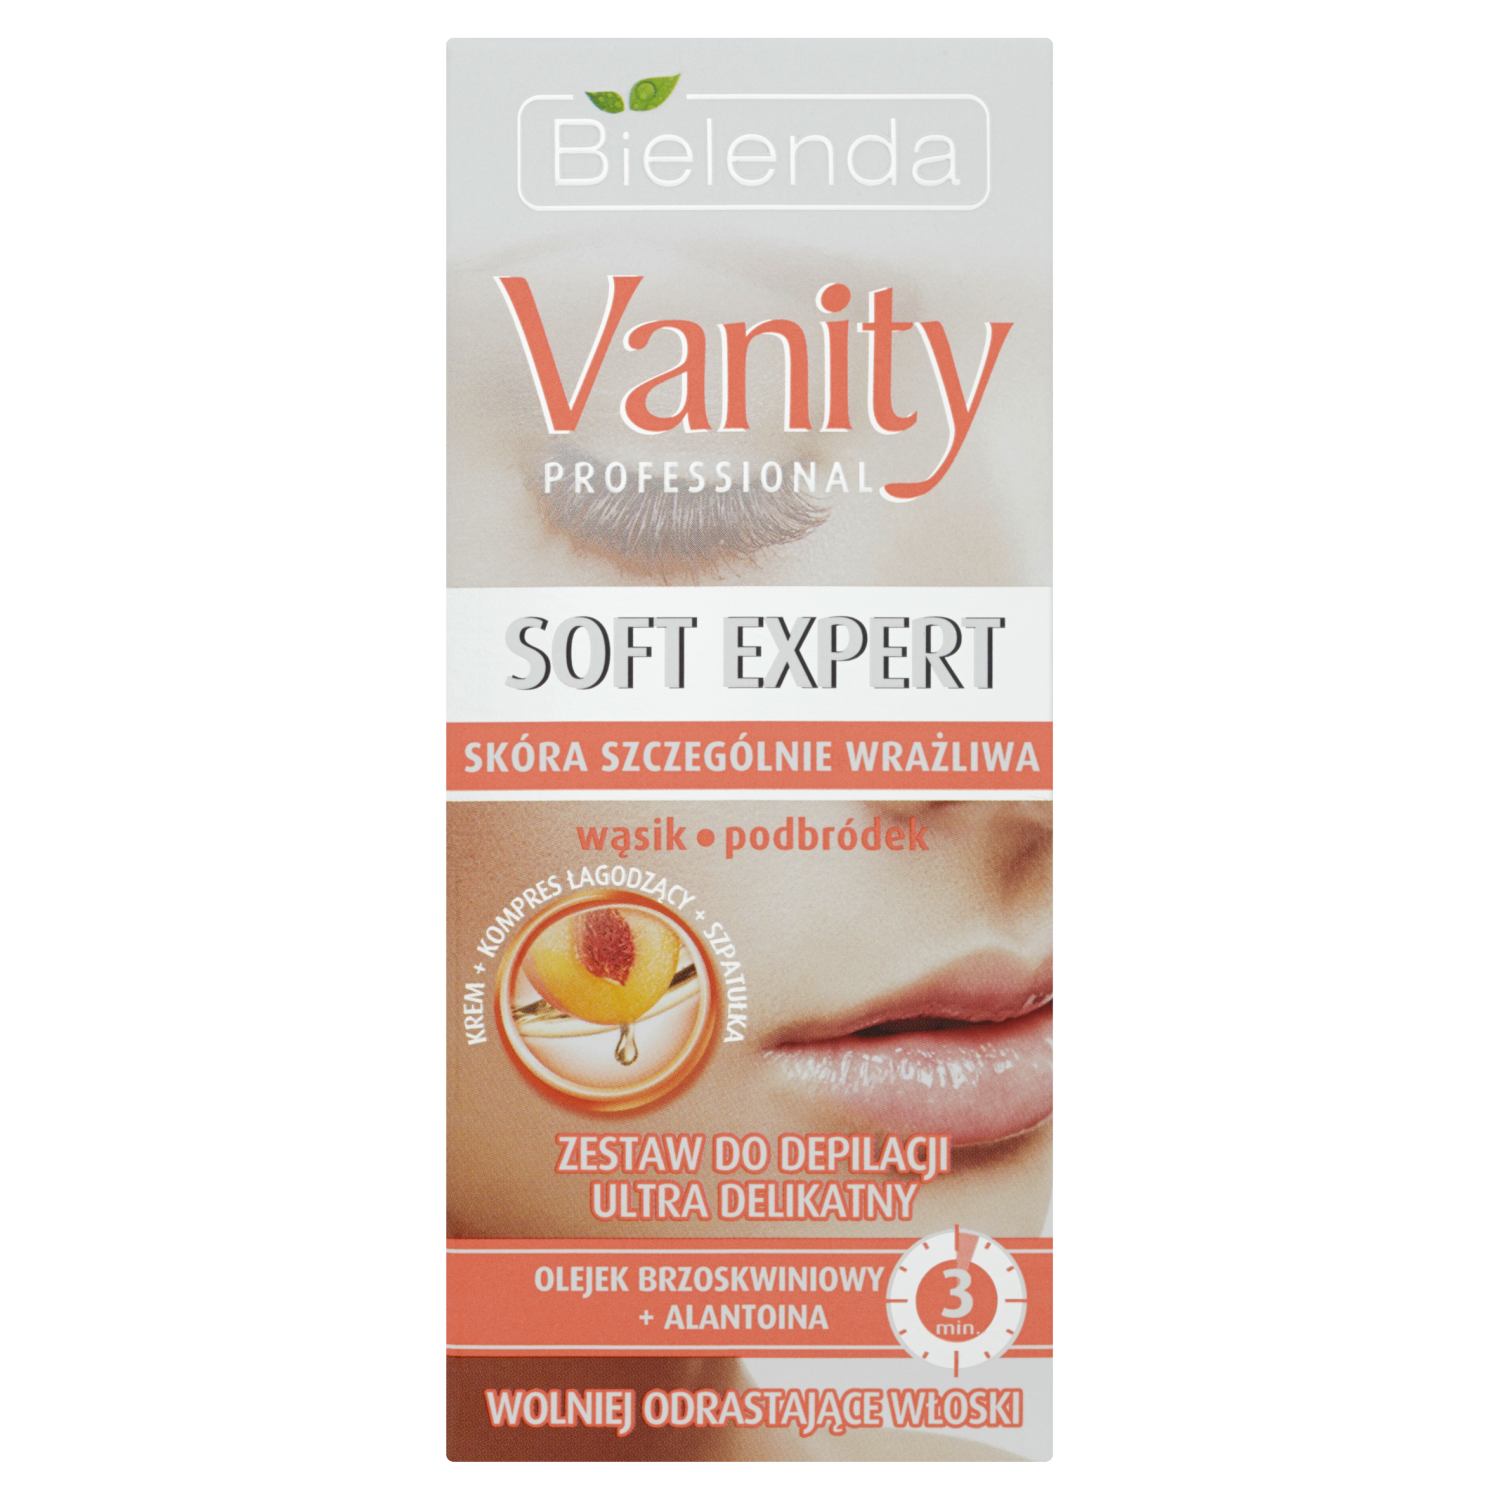 Bielenda Vanity Soft Expert krem do depilacji, 15 ml | hebe.pl